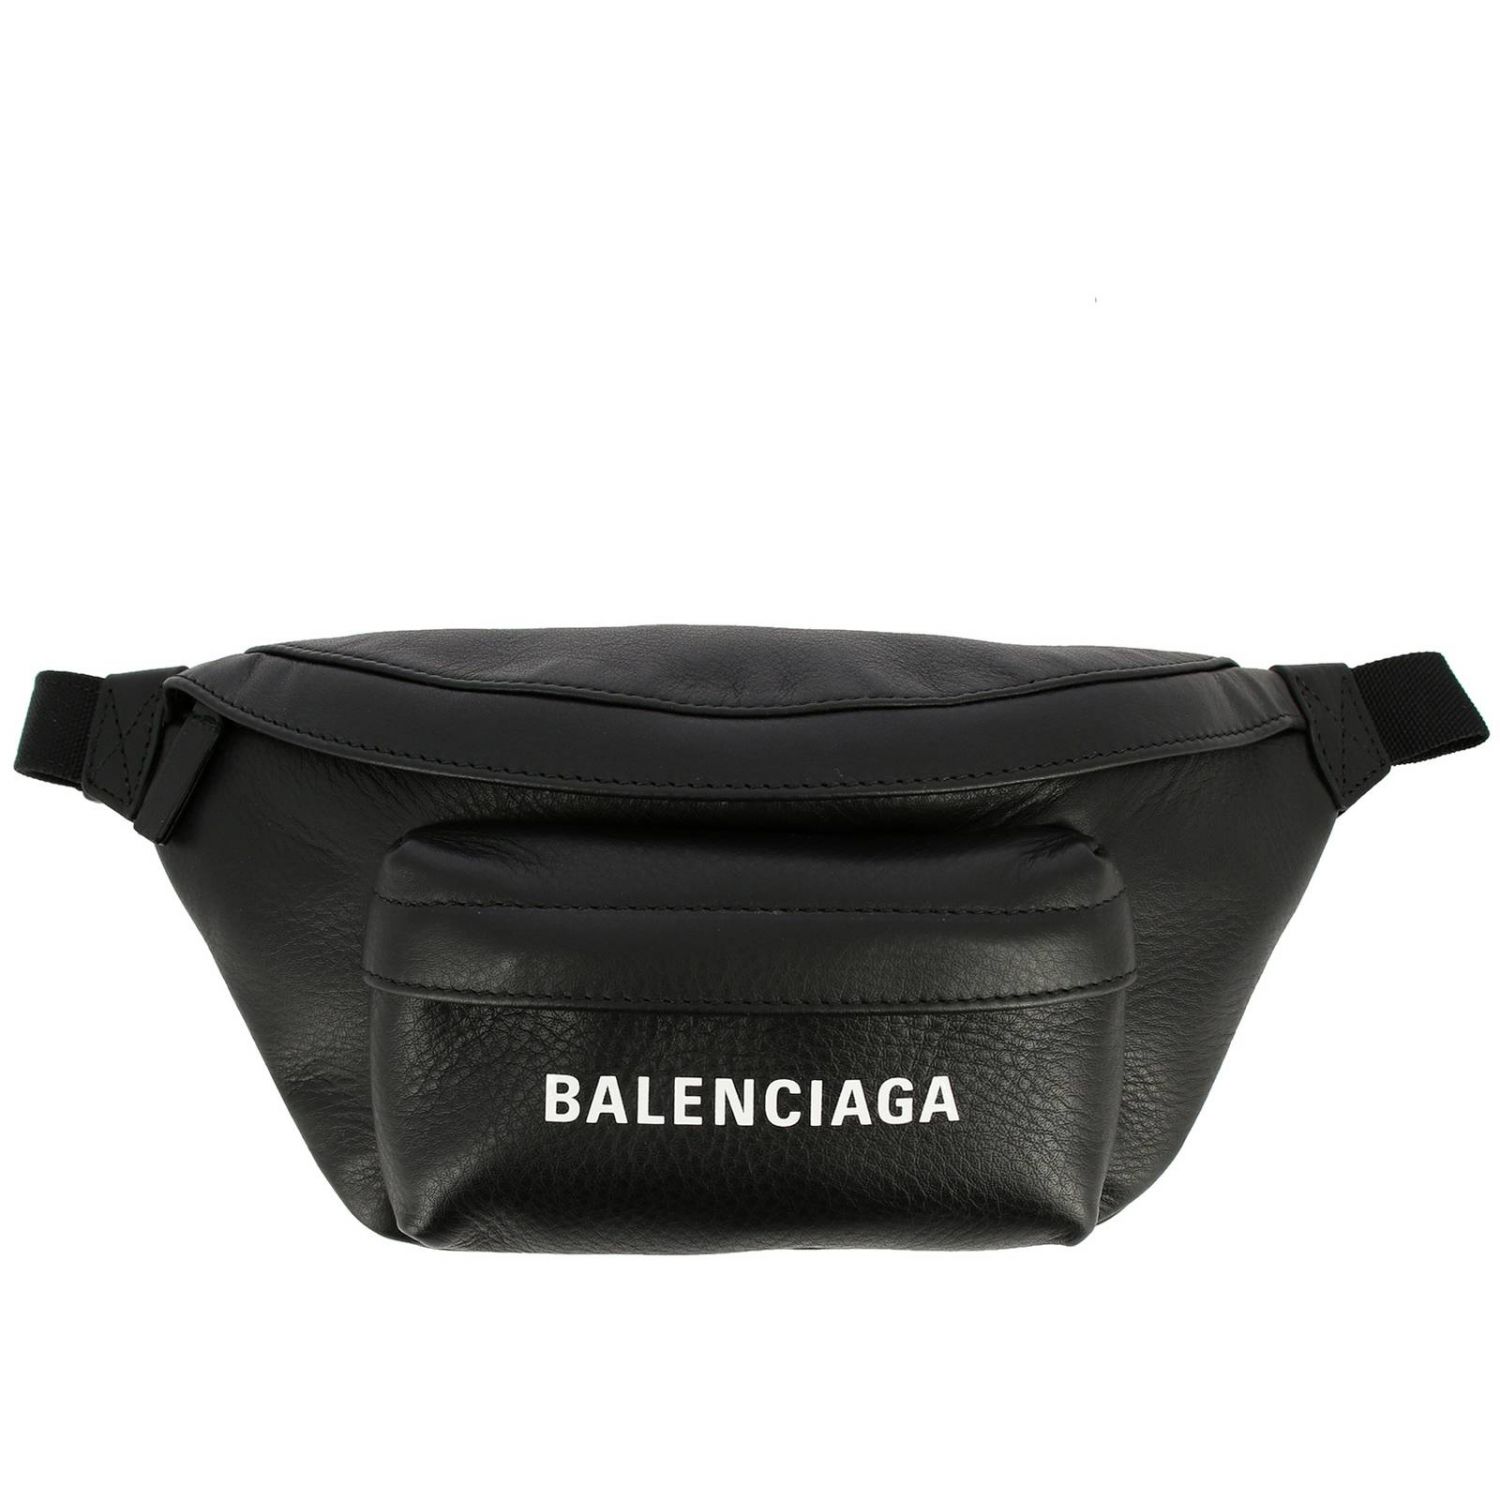 BALENCIAGA: Riñonera Everyday de cuero, Negro | RiÑOneras Balenciaga 579617 DLQQN en en GIGLIO.COM